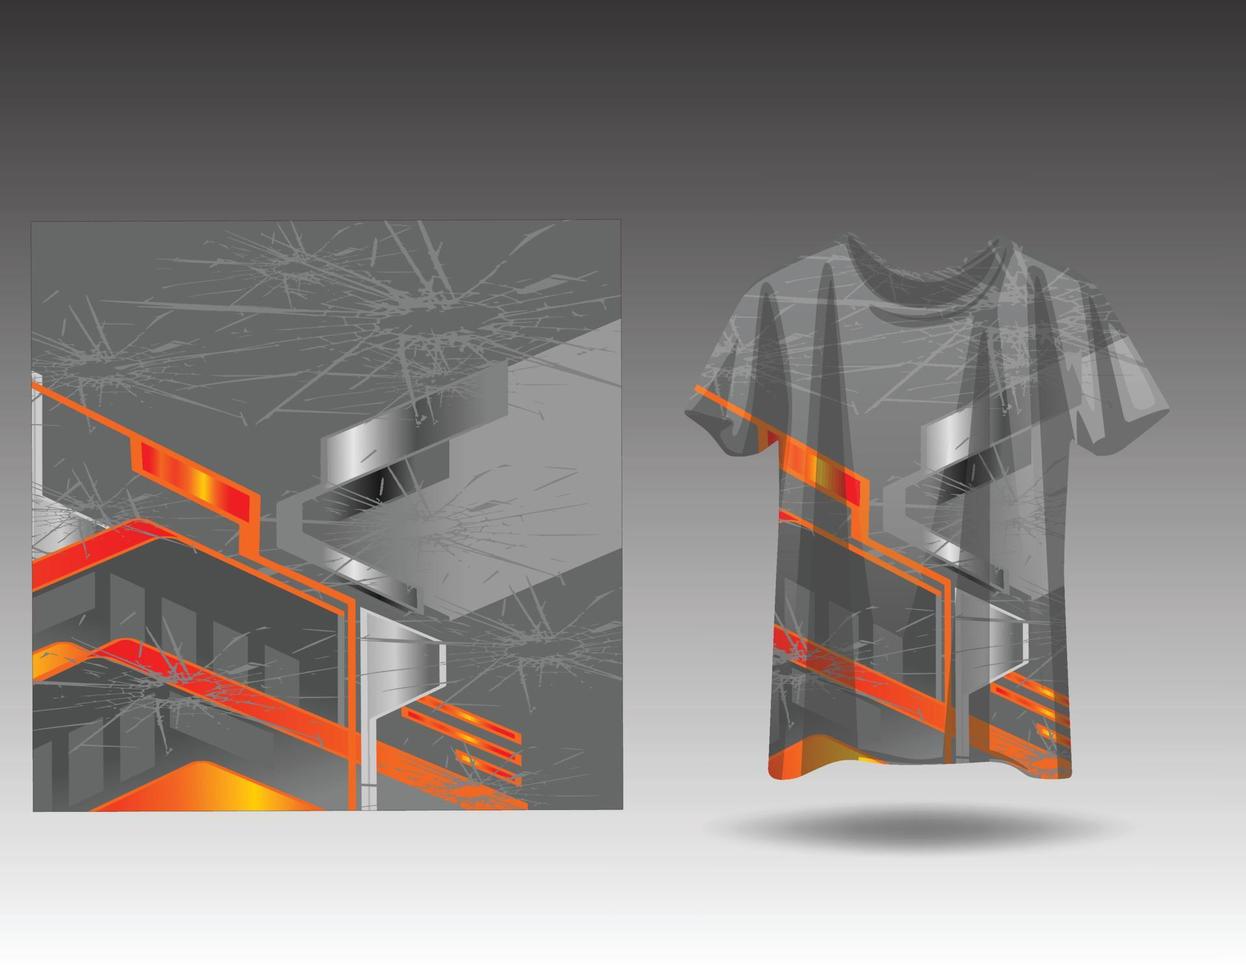 t-shirt sport- ontwerp voor racing Jersey wielersport Amerikaans voetbal gaming vector